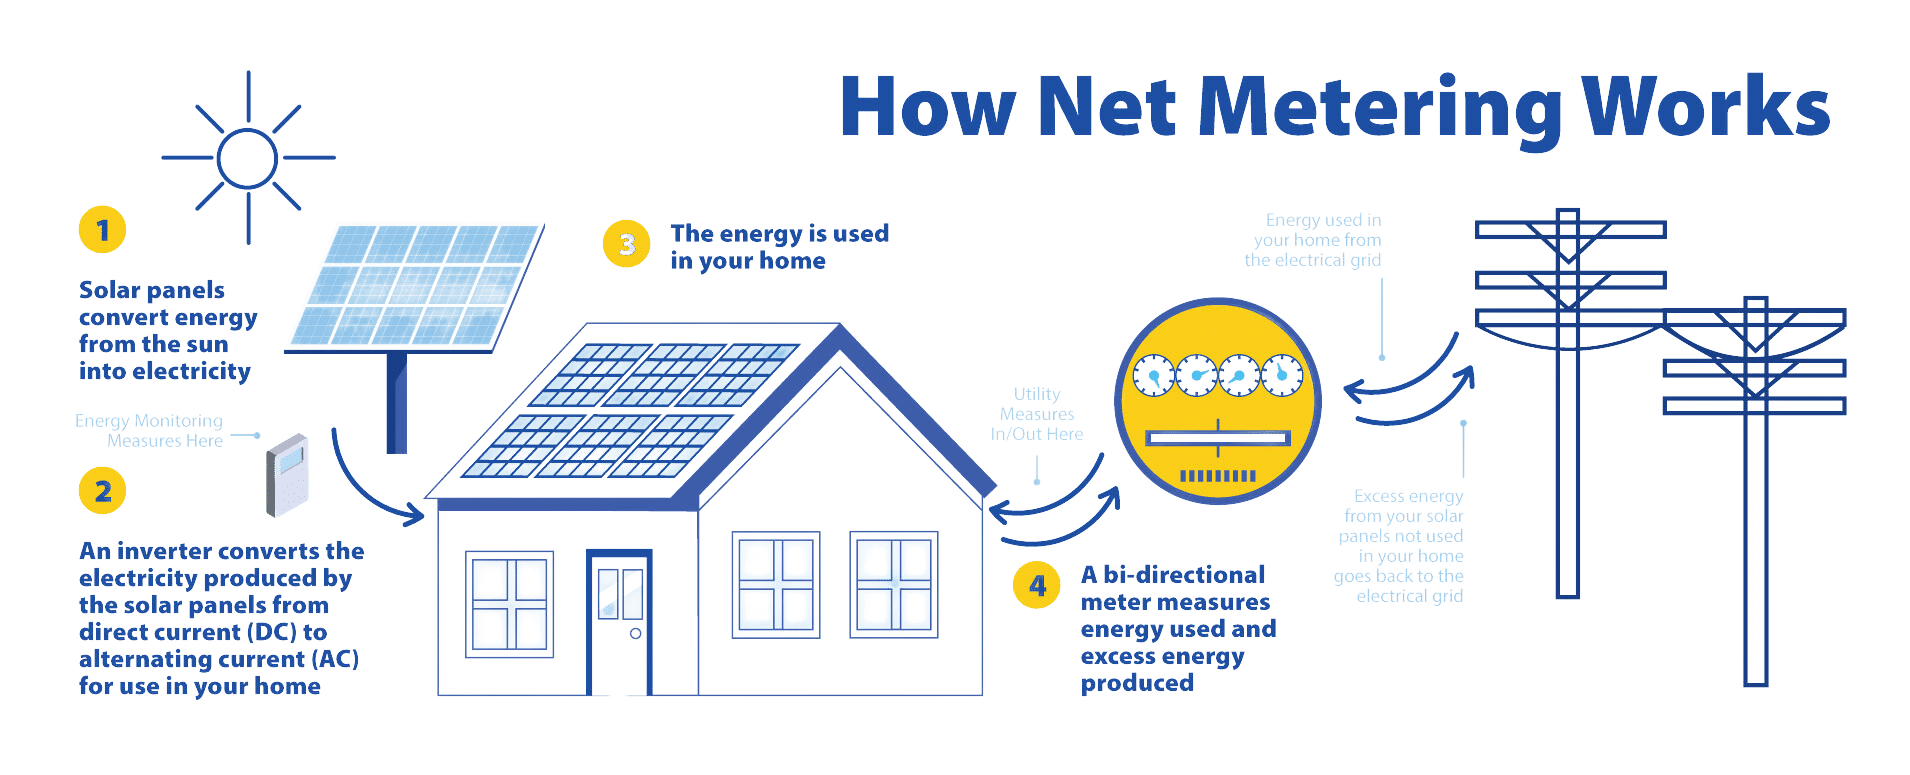 Informational graphic explaining how net metering works